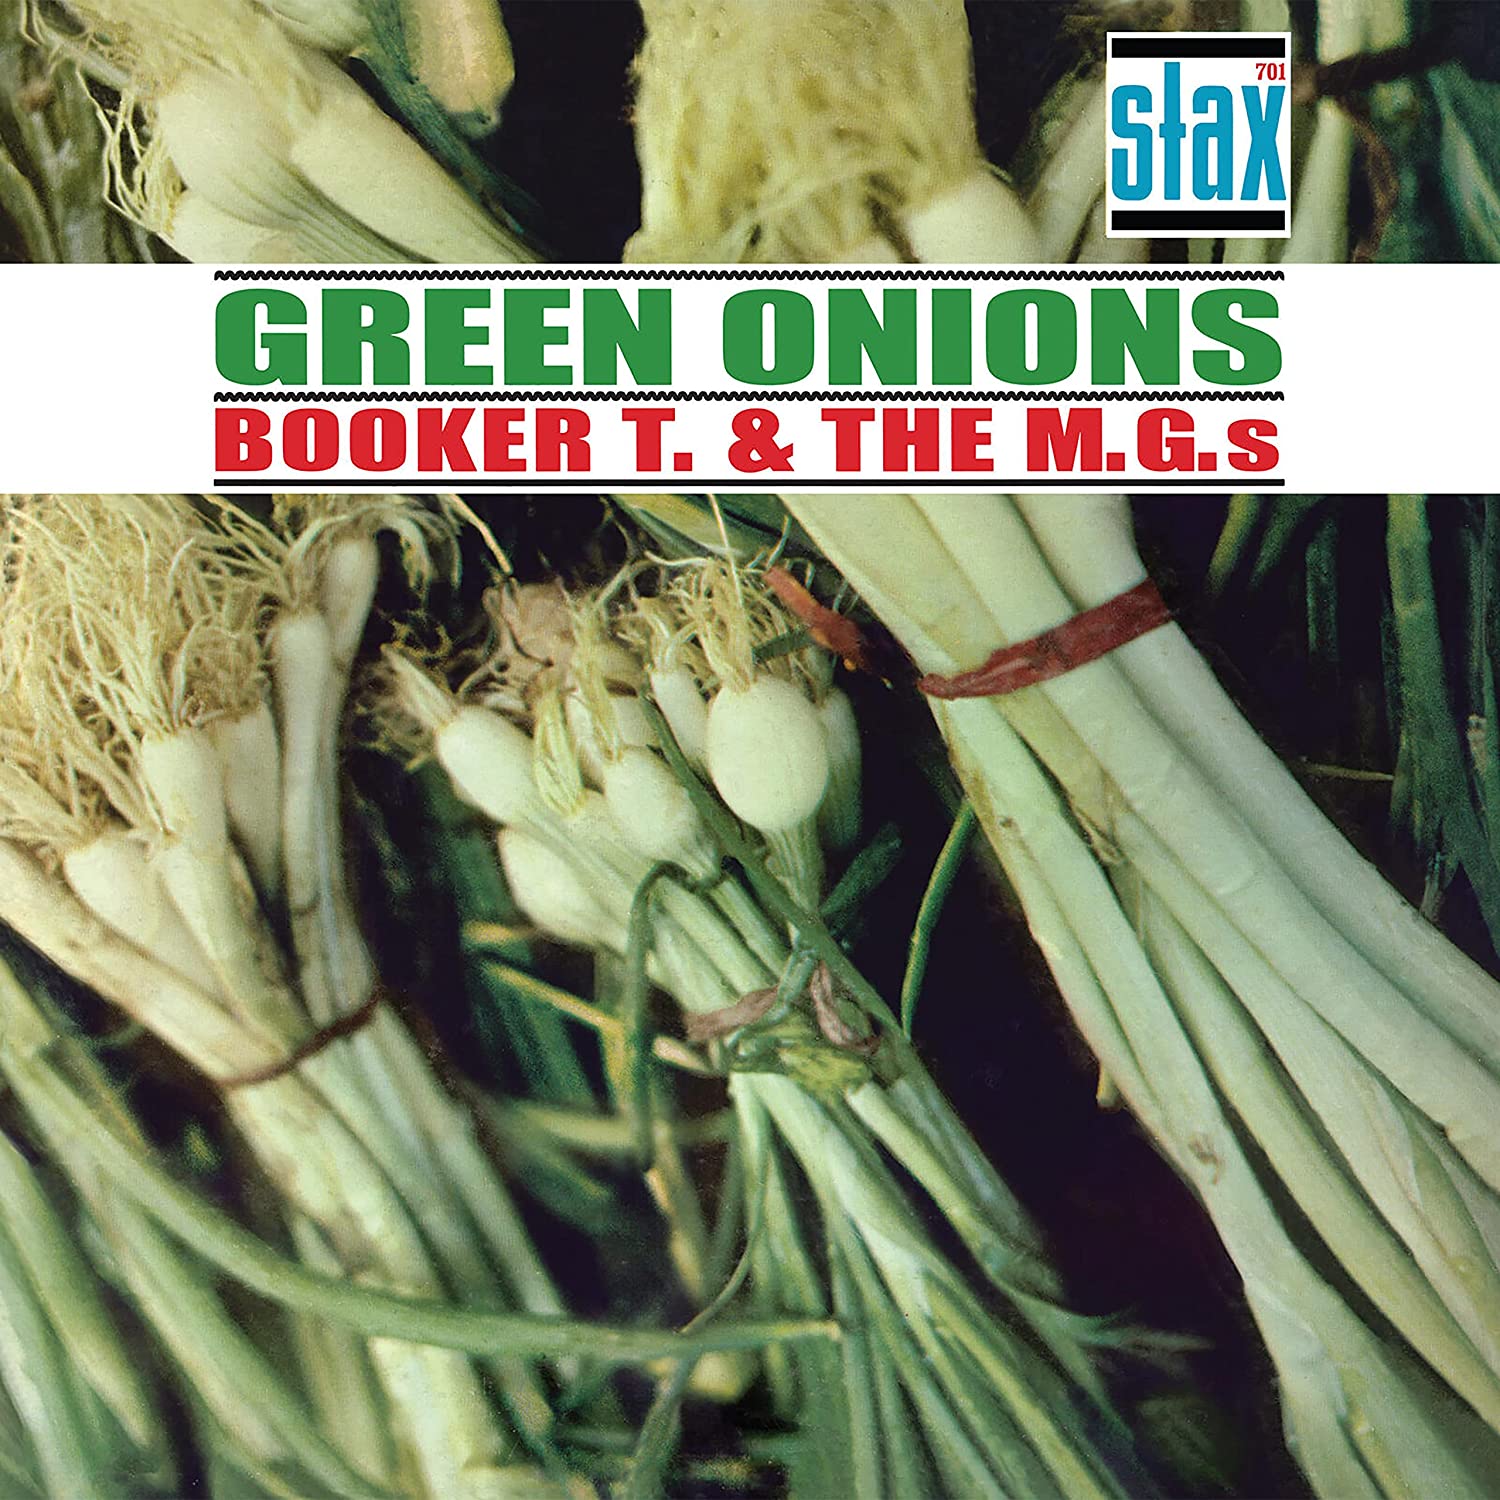 Booker T. & The M.G.s Green Onions Deluxe 60th Anniversary CD [Importado]